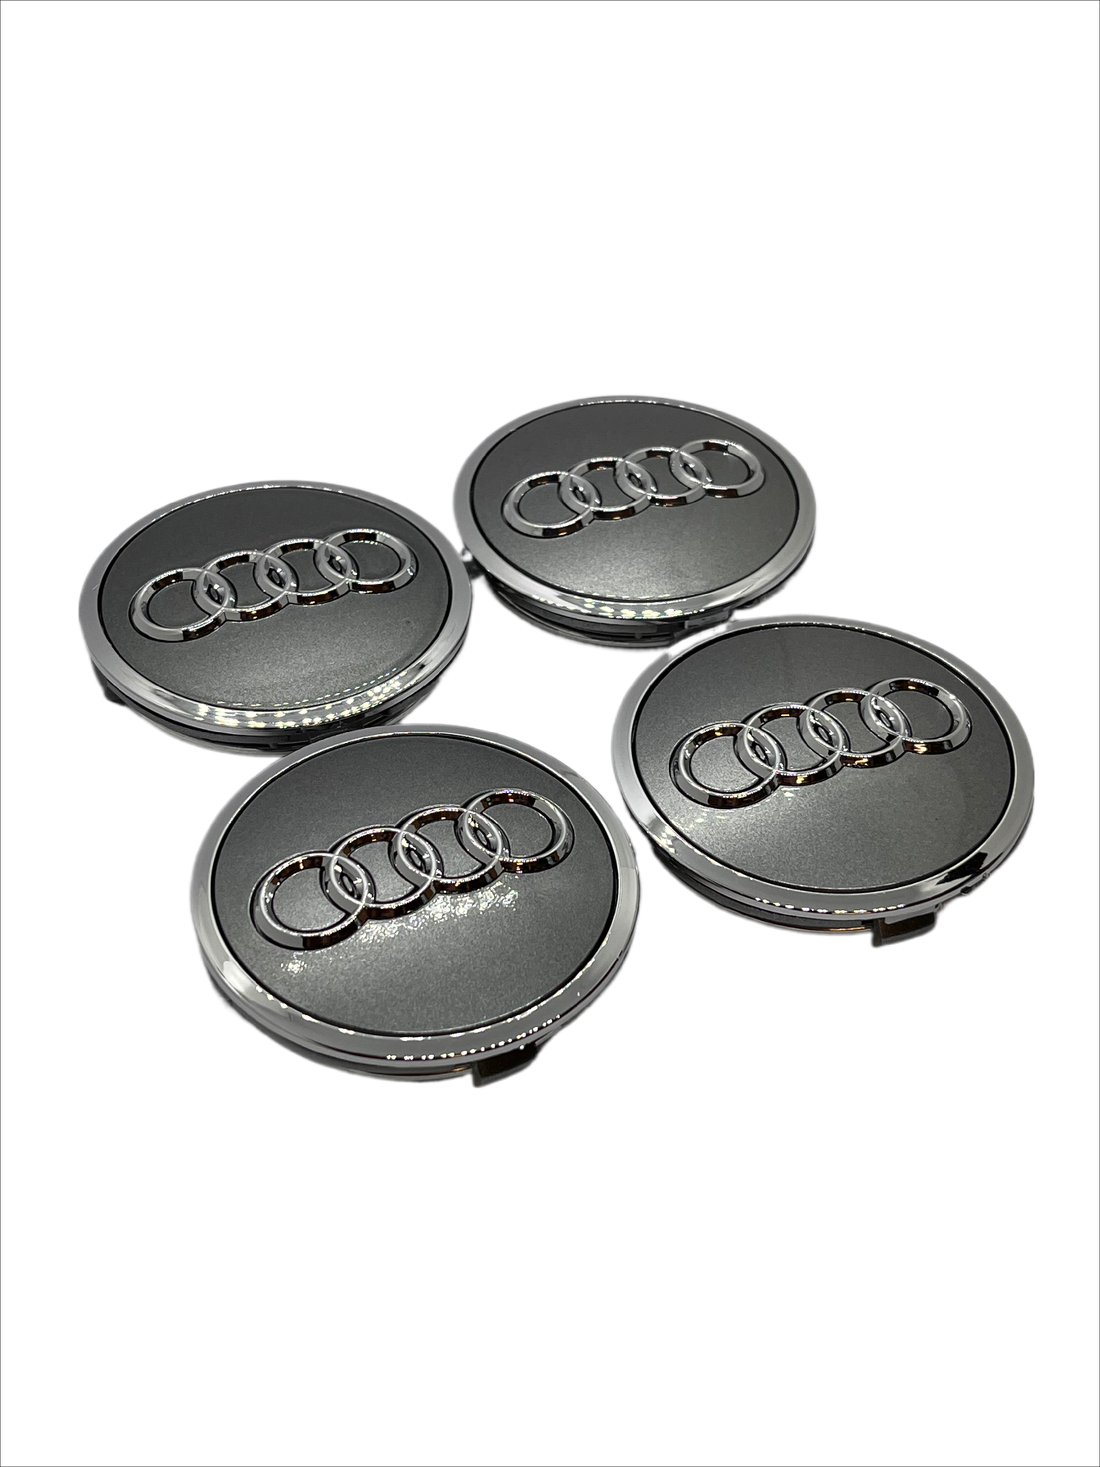 Audi centerkapsler i sølv/grå, sæt med 4 stk - 61/69 mm - BilligStyling